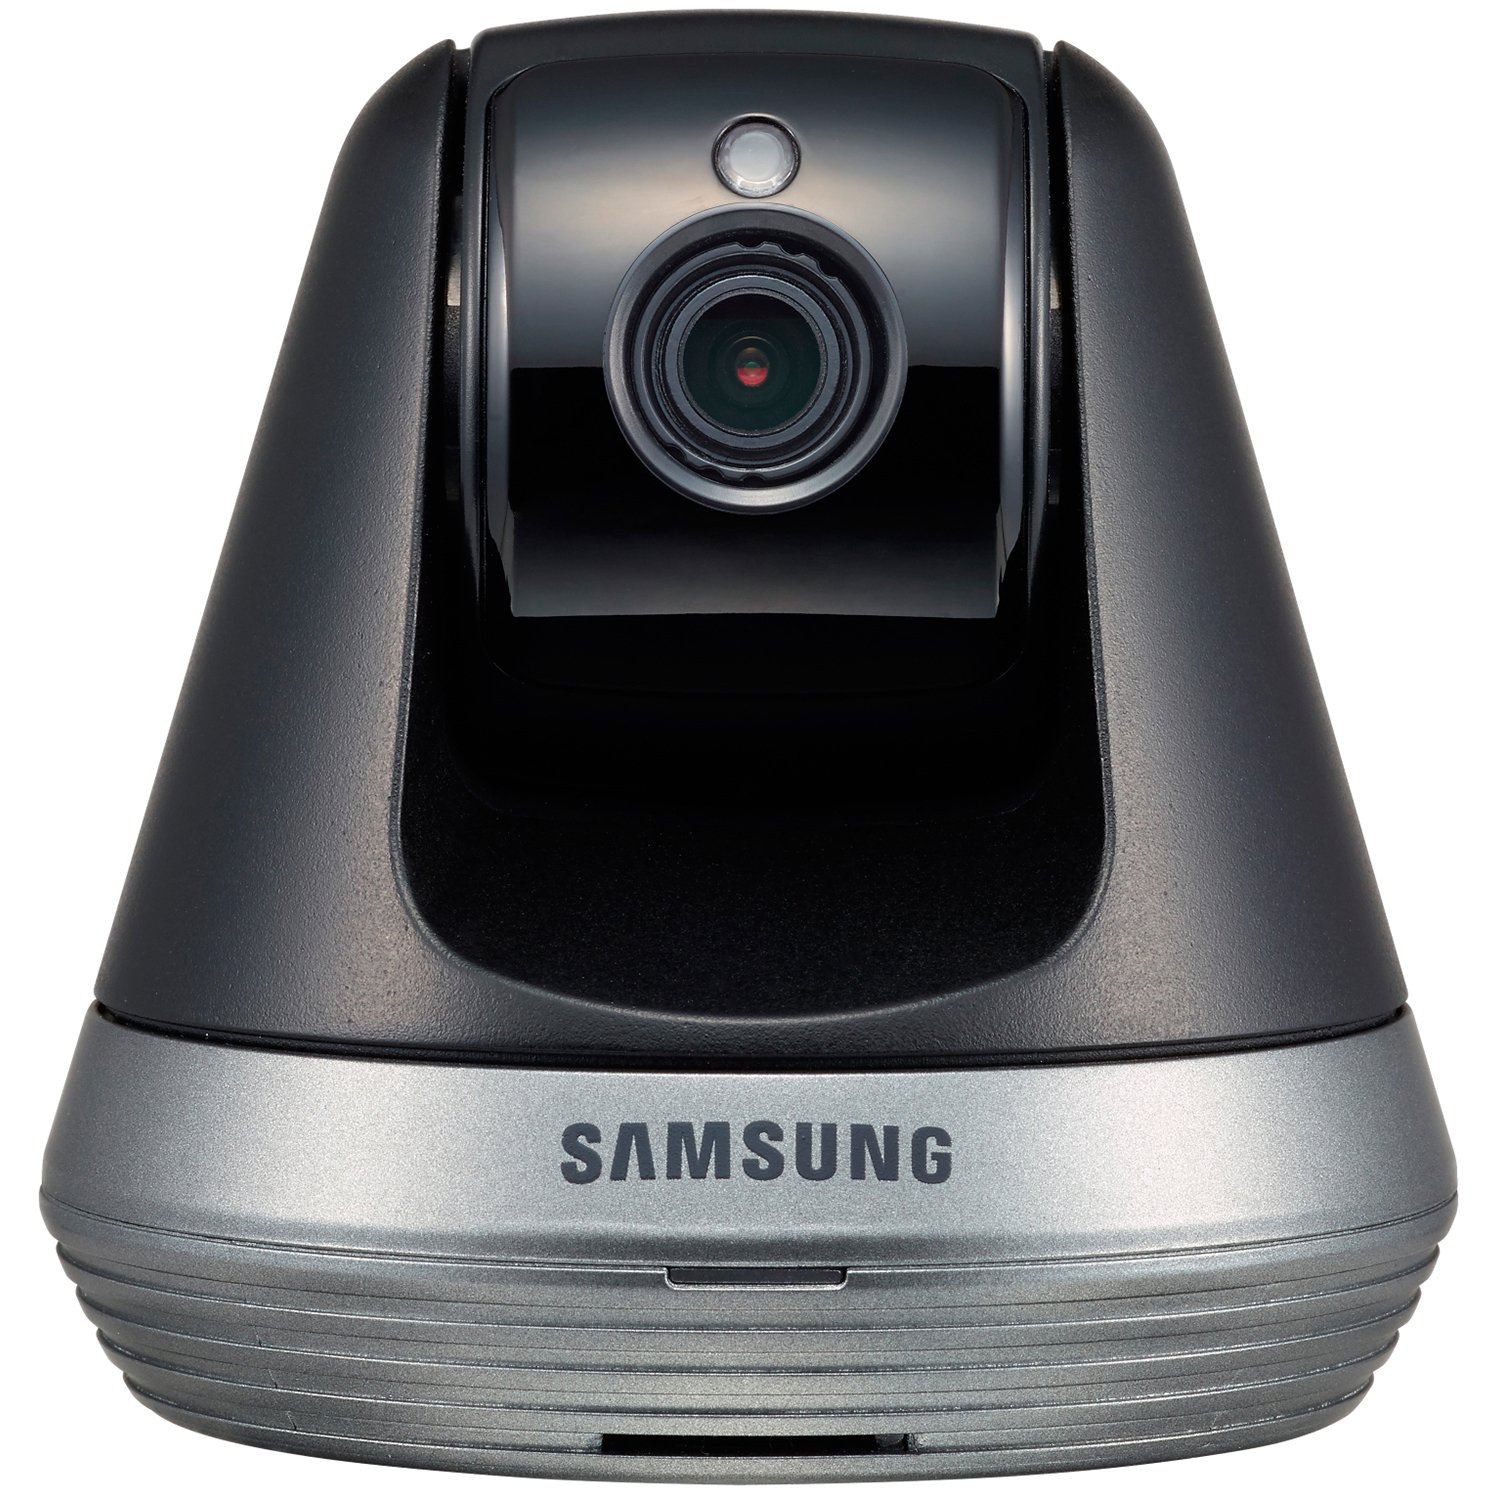 Видео-няня Samsung SNH-V6410PN